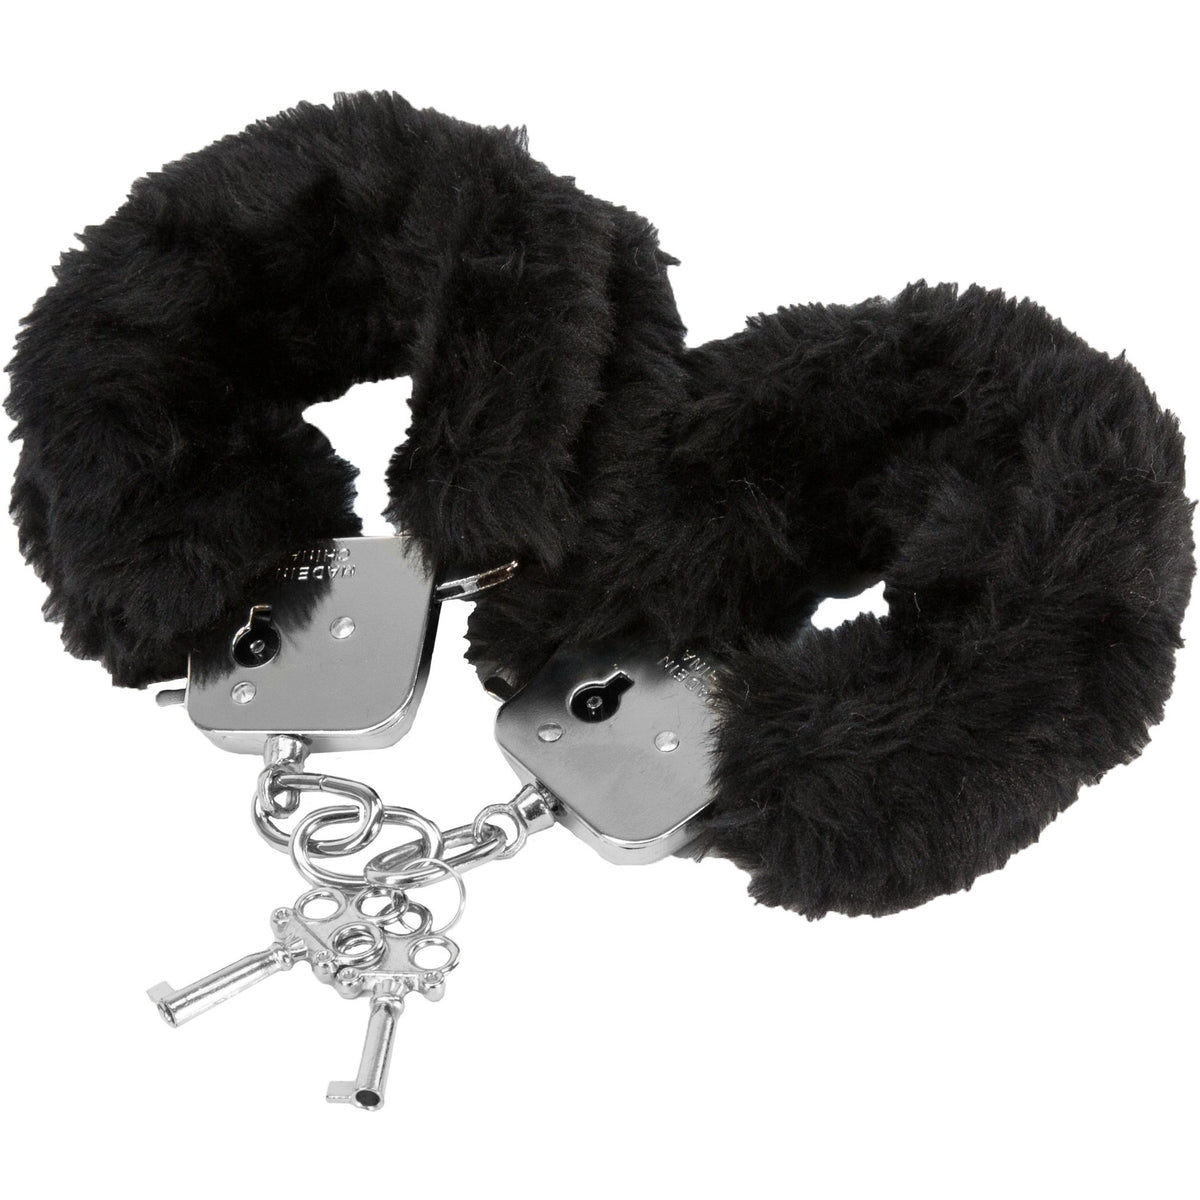 Tender Cuffs Furry Handcuffs - Black